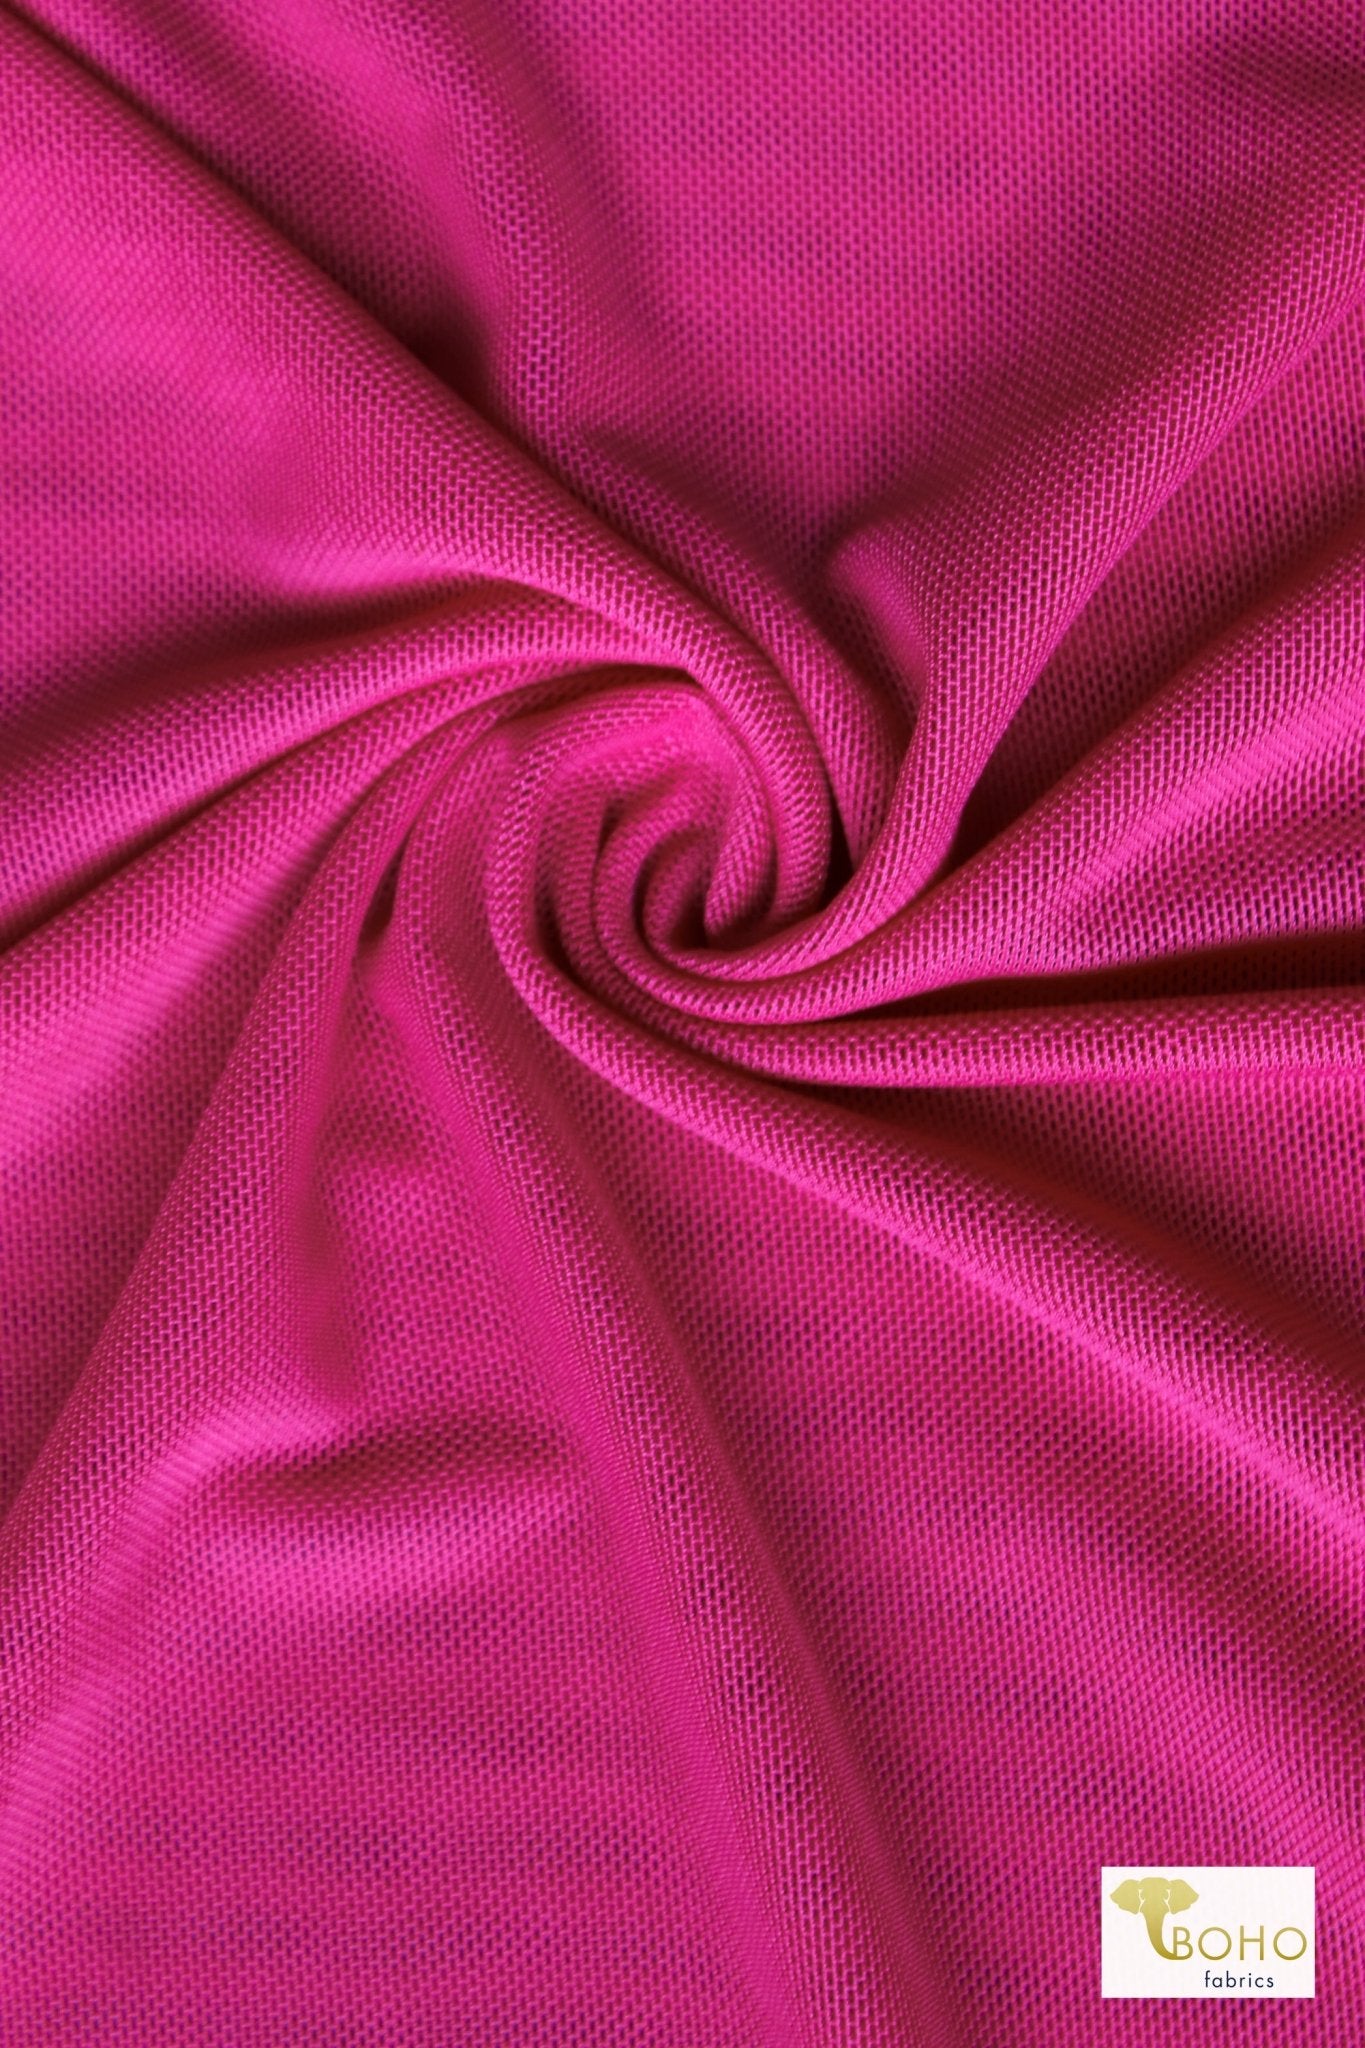 Bright Pink, Stretch Mesh - Boho Fabrics